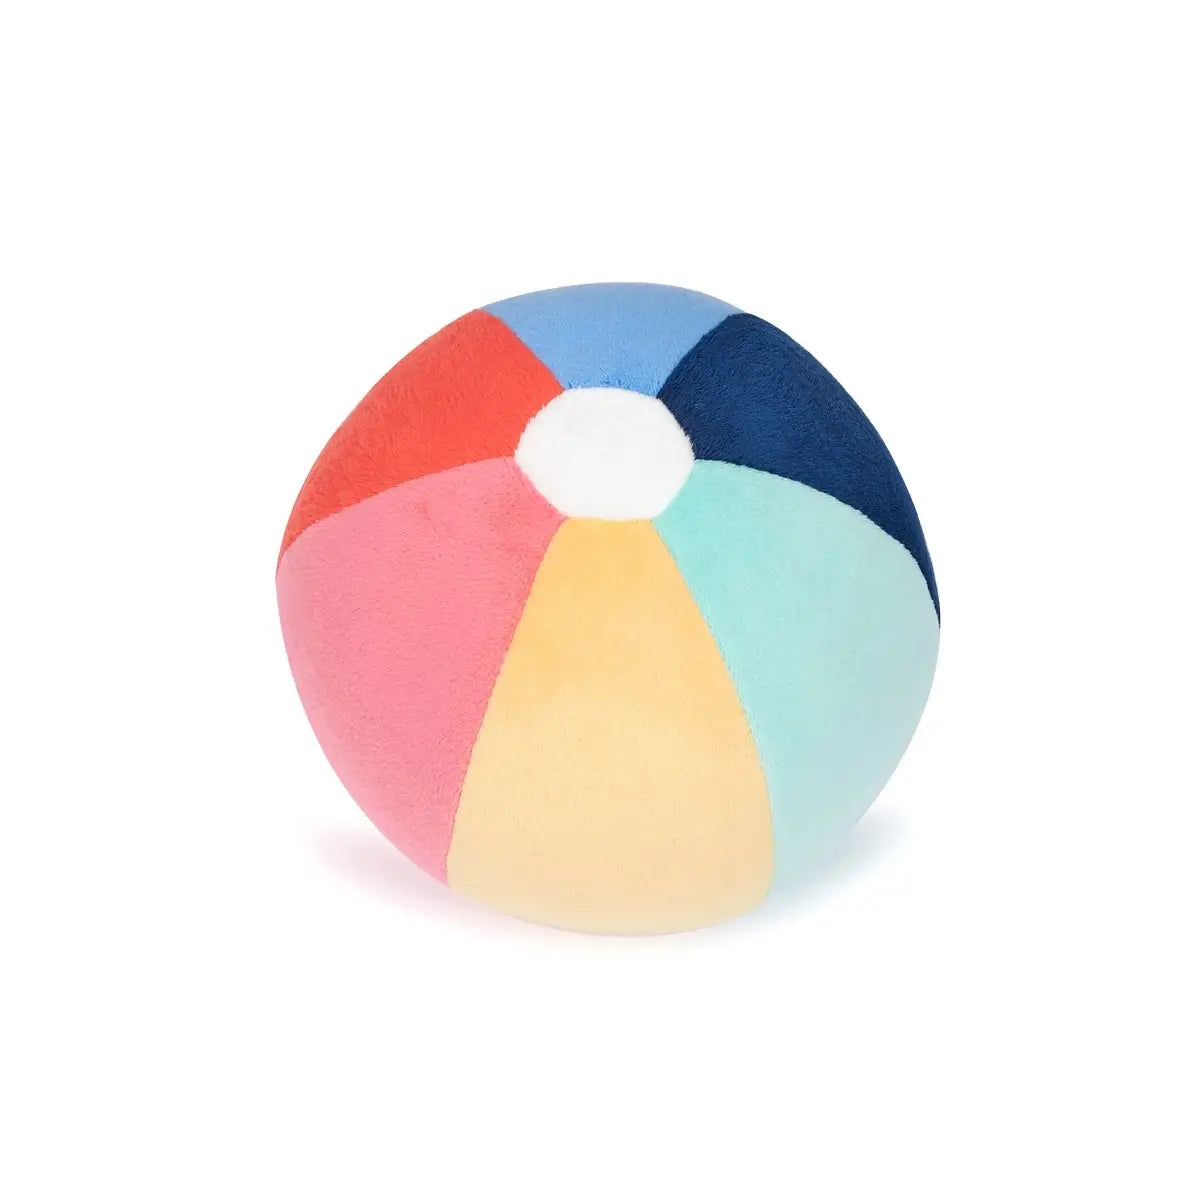 Colorful beach ball-shaped plush dog toy.